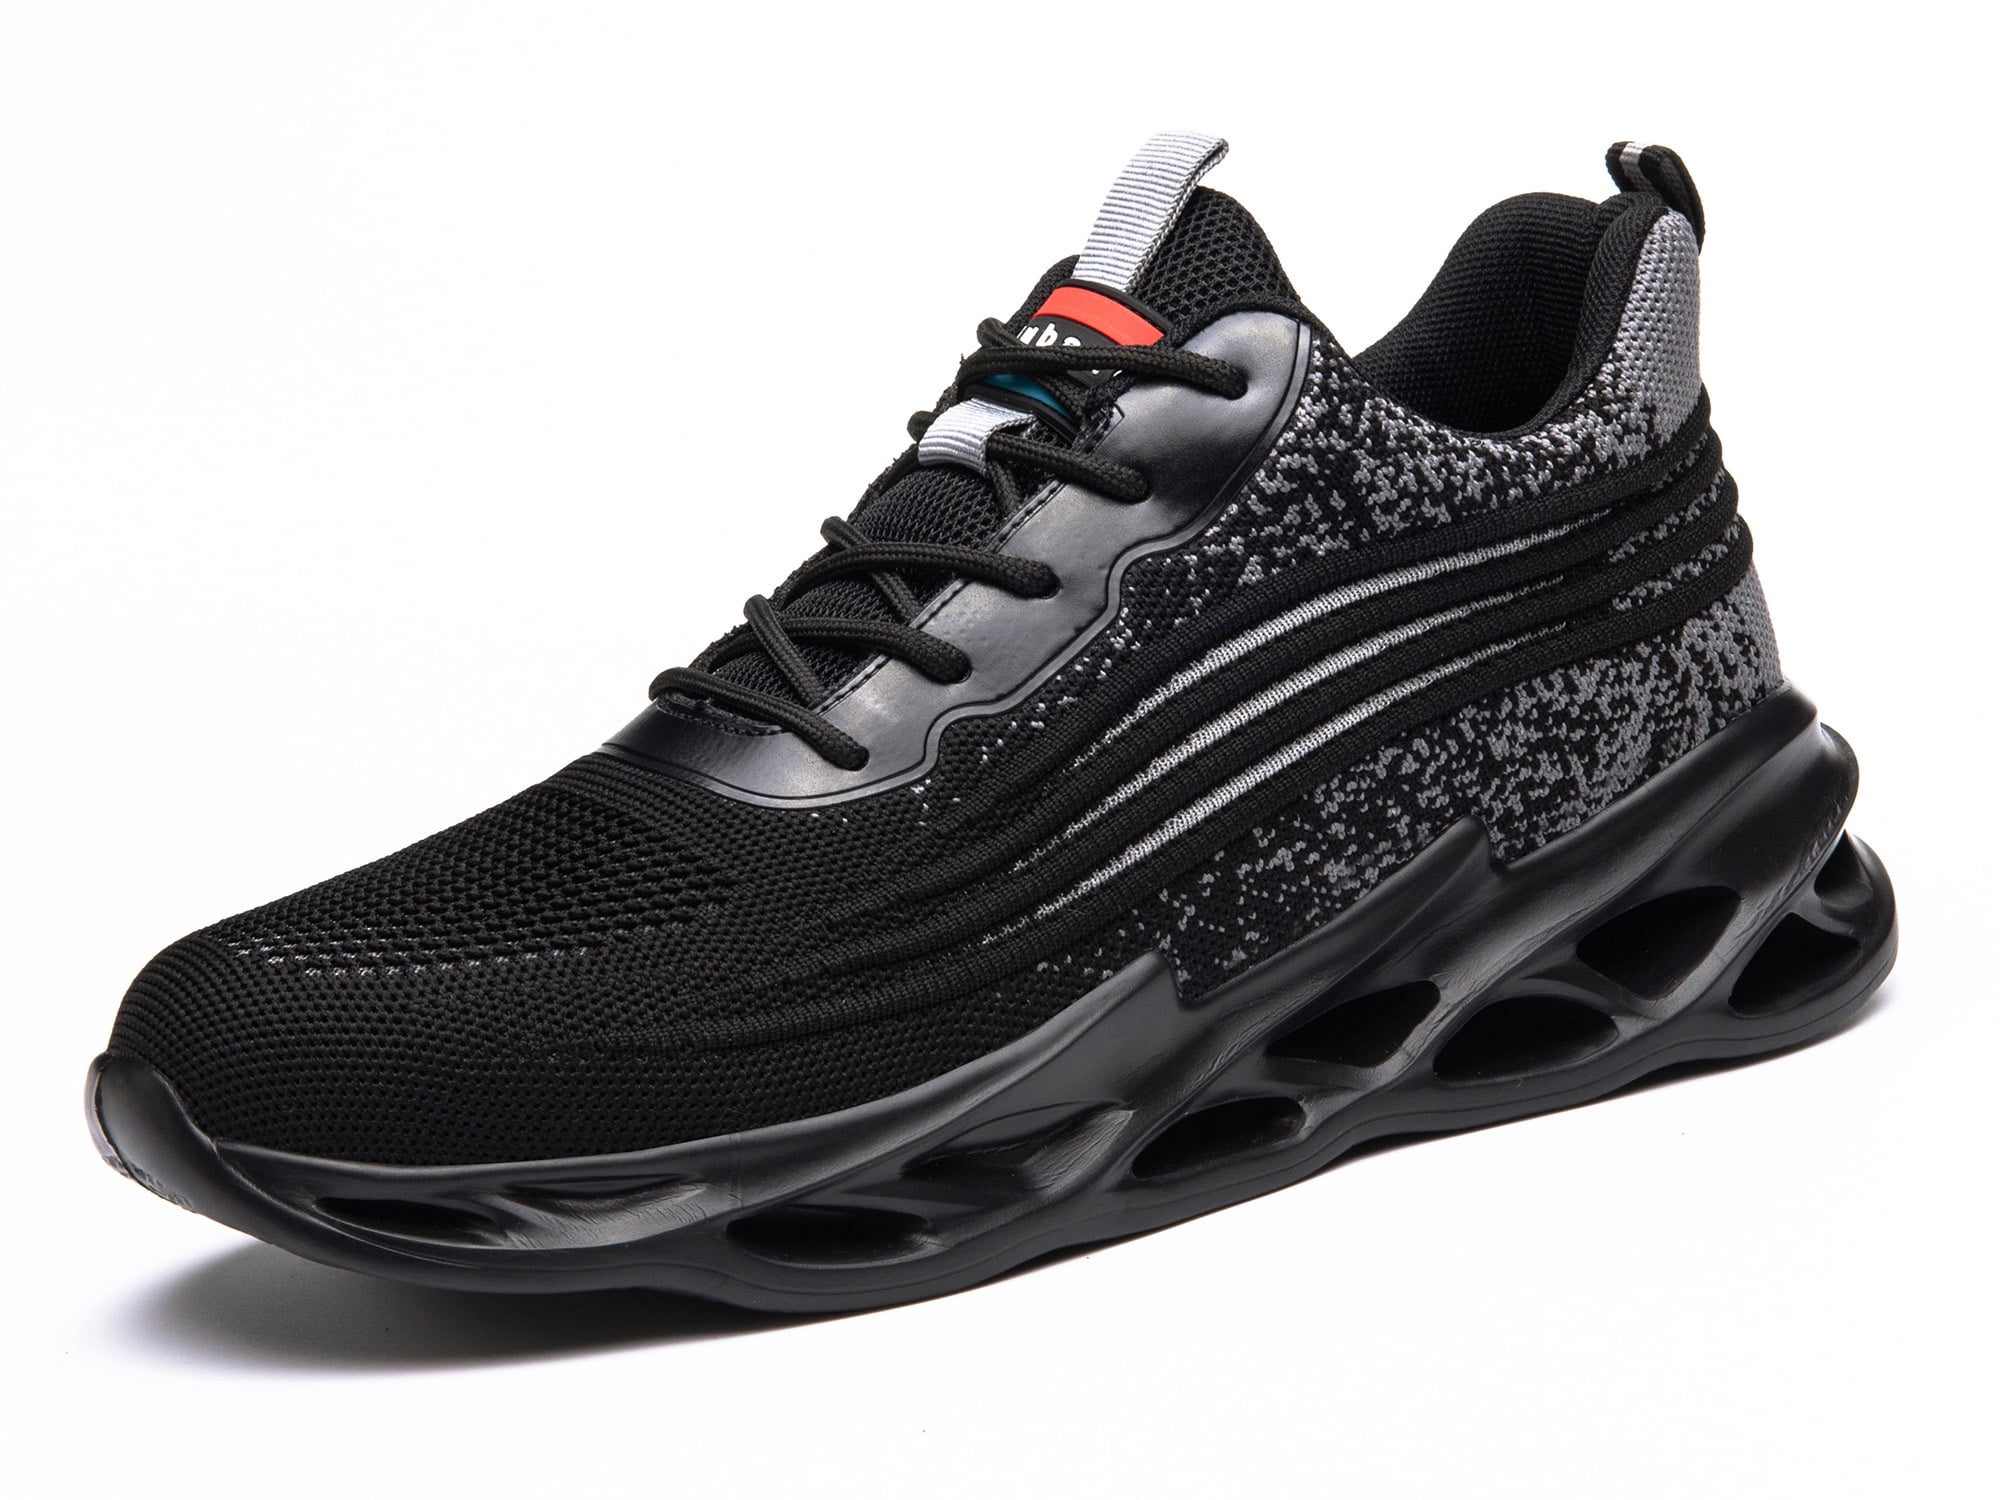 OwnShoe Steel Toe Safety Shoes for Men Women Work Sneakers Industrial ...